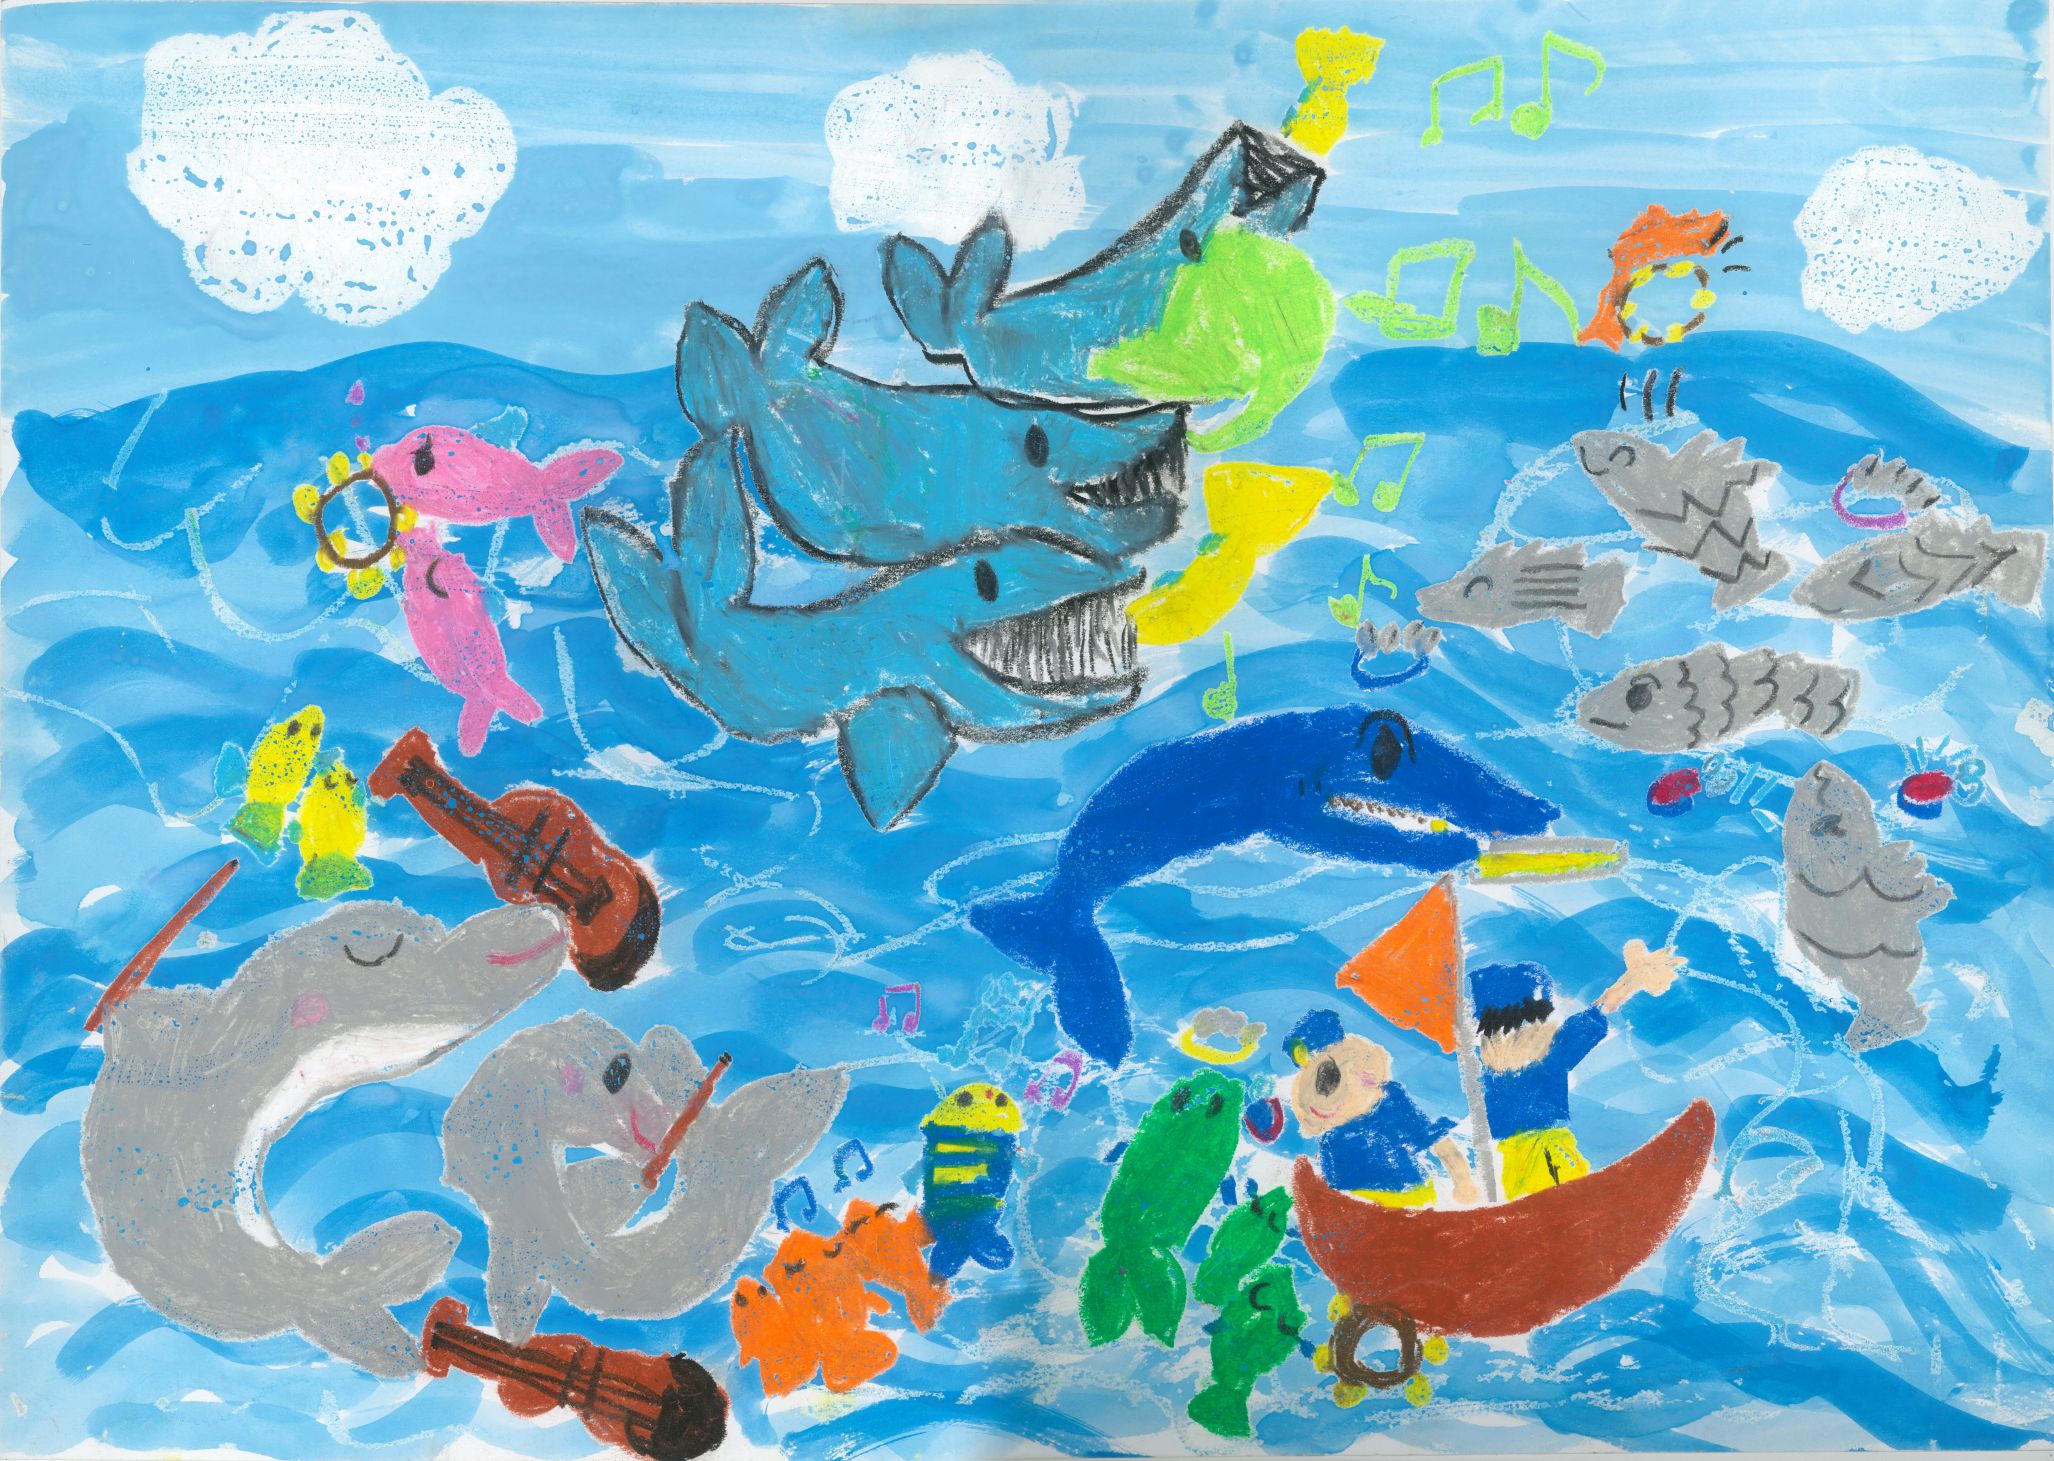 Student artwork – Concert of sea creatures